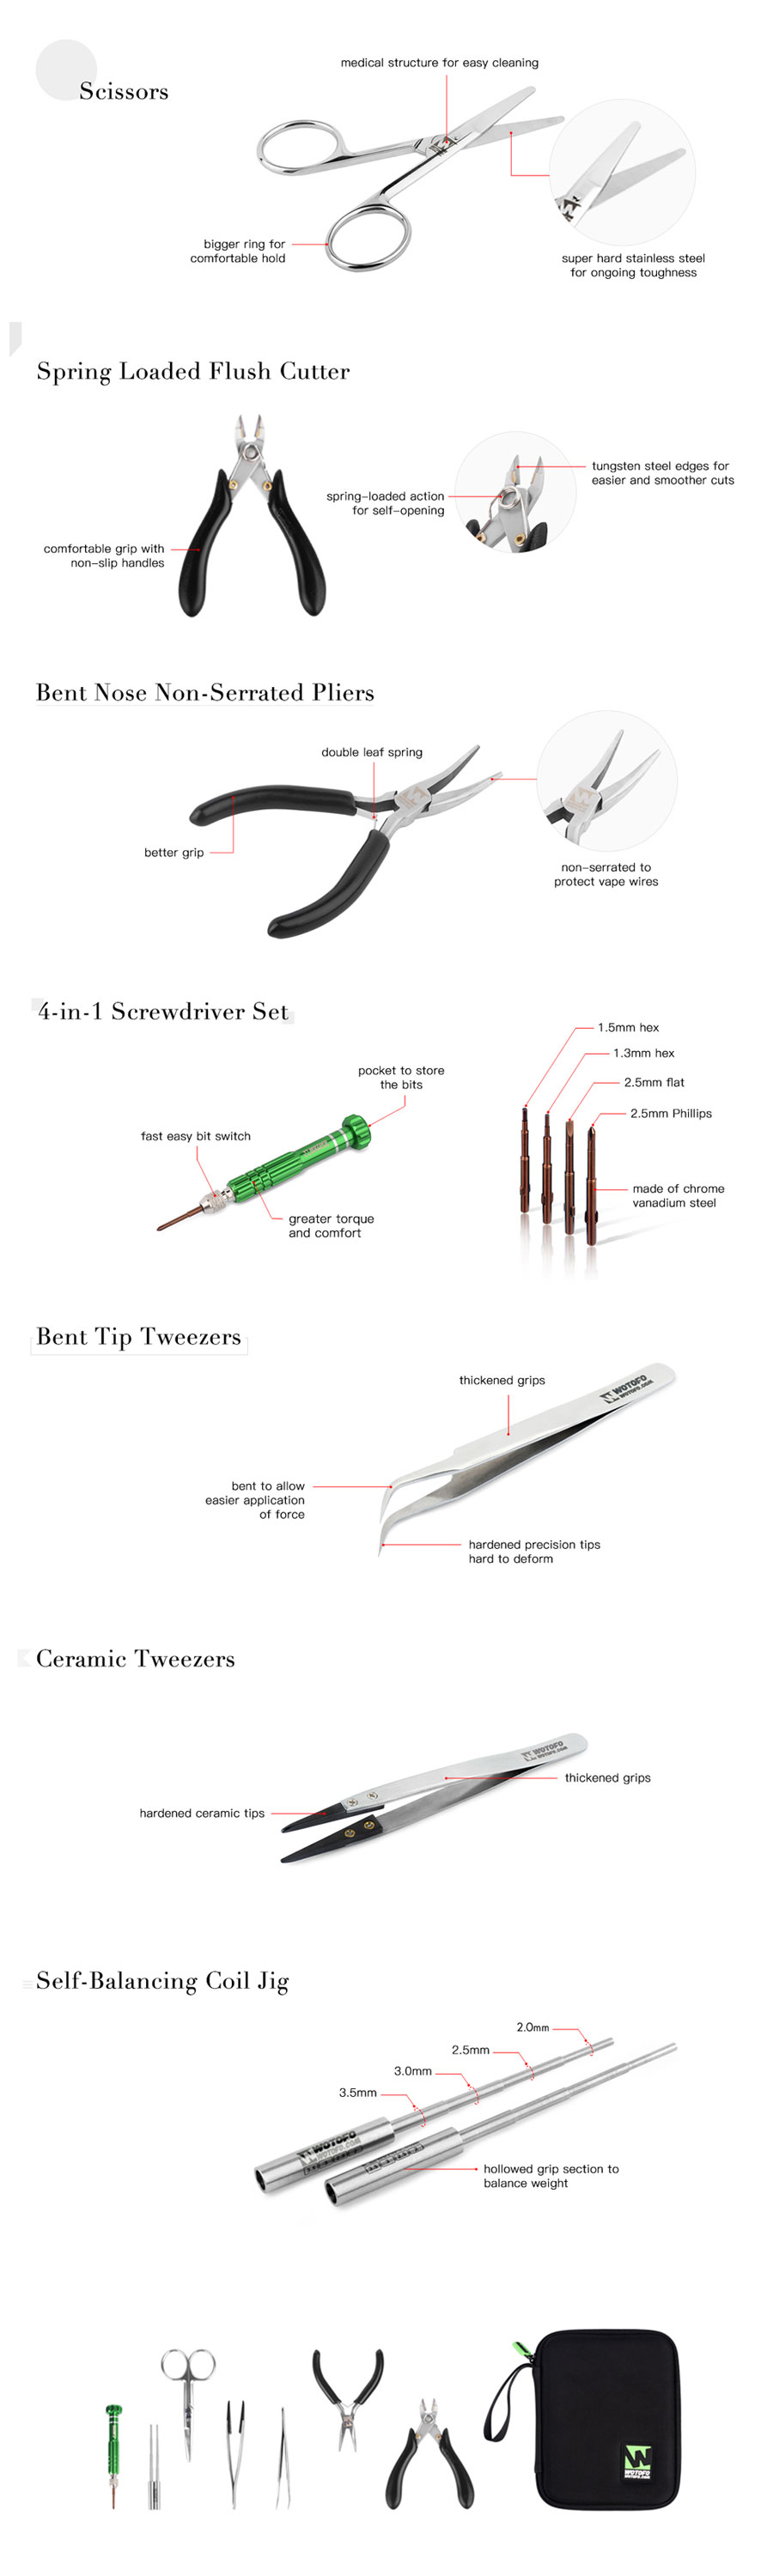 Wotofo Vape Tool Kit - Diagram